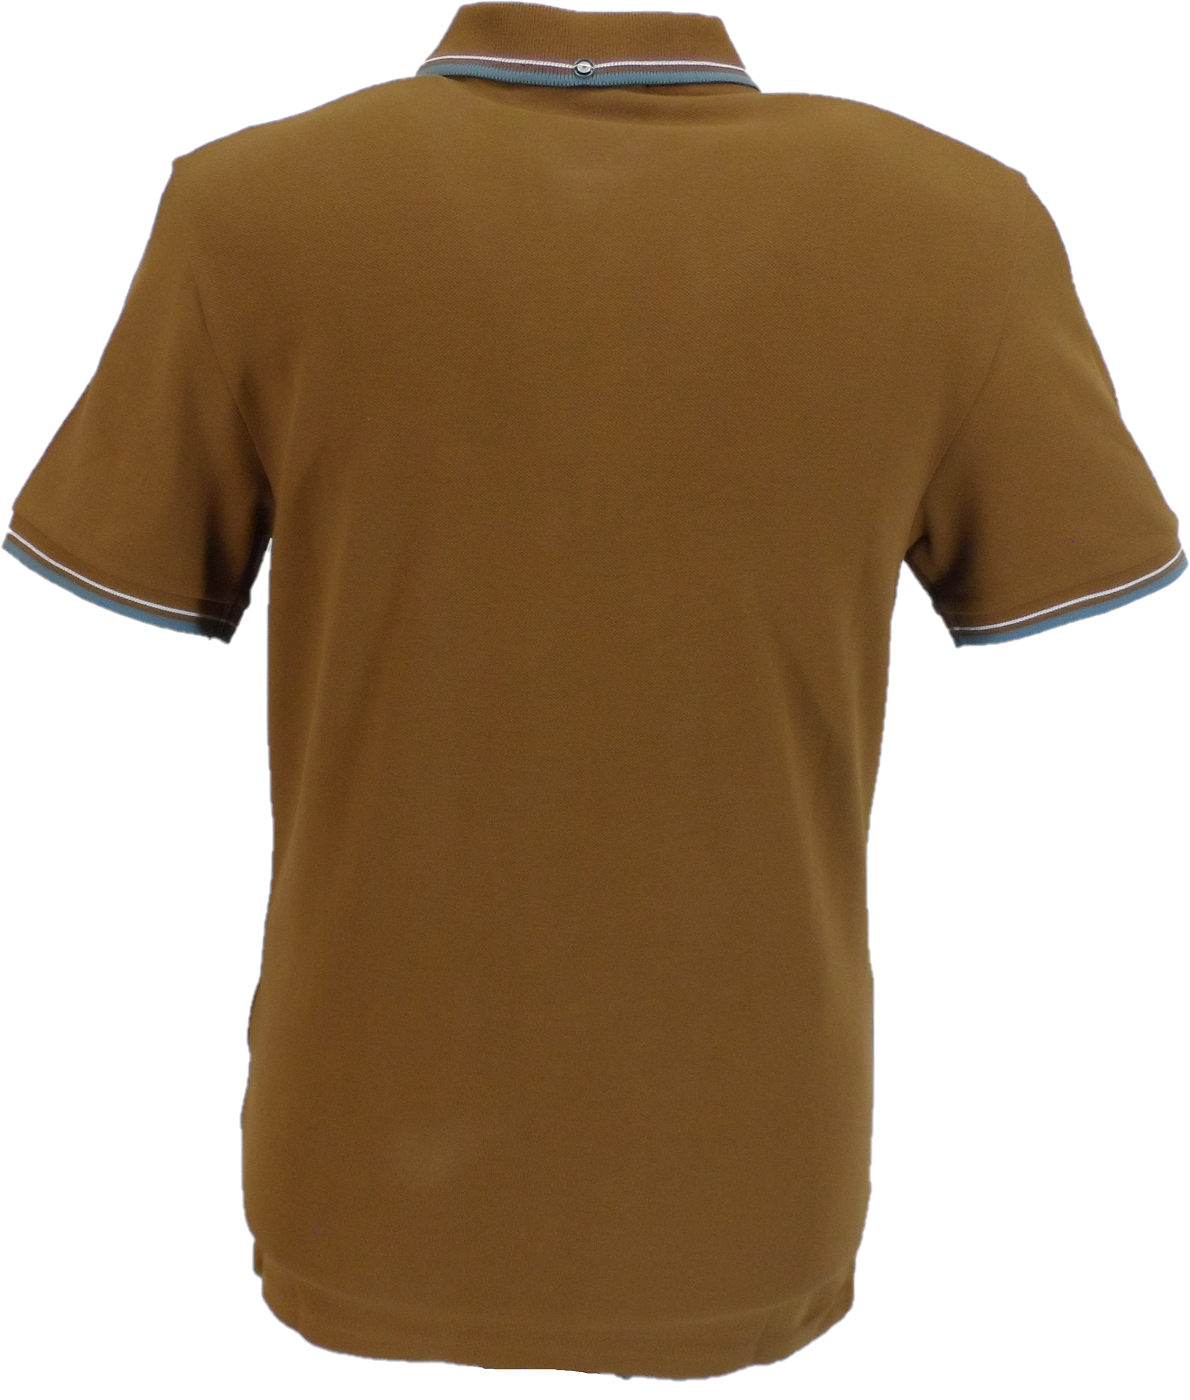 Ben Sherman Herren-Poloshirt in Ginger Brown aus 100 % Baumwolle